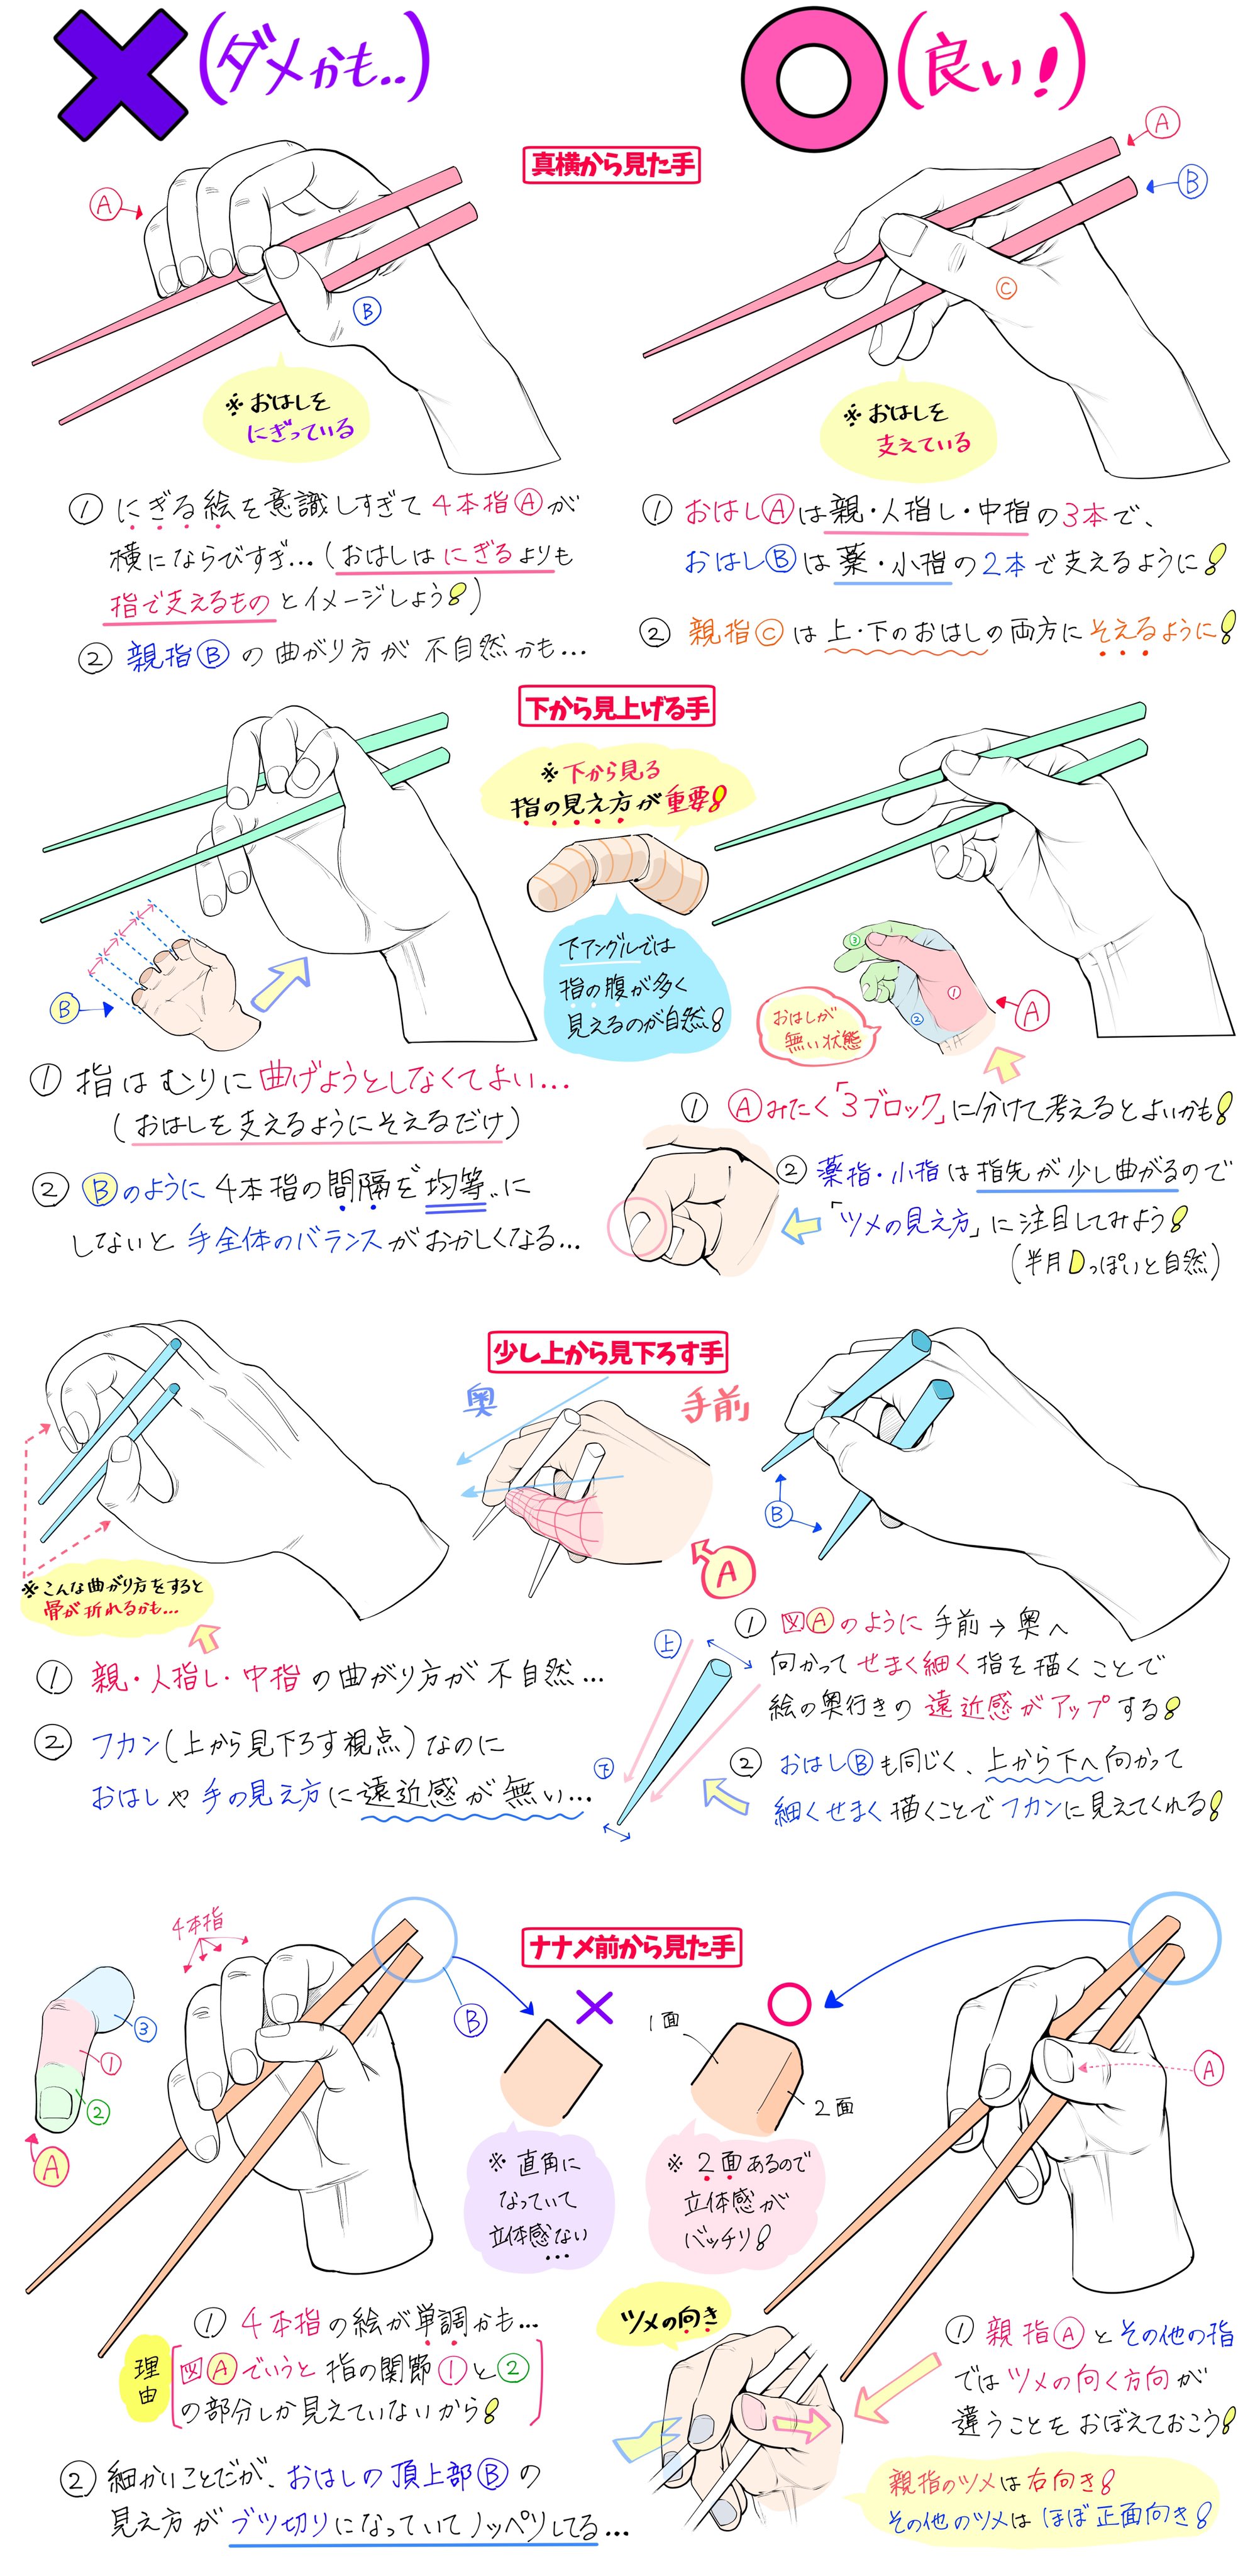 Twitter 上的 吉村拓也 イラスト講座 箸を持つ手 の描き方 指の配置と箸の持ち方 が上達する ダメかも と 良いかも T Co 0wrq9ifttj Twitter